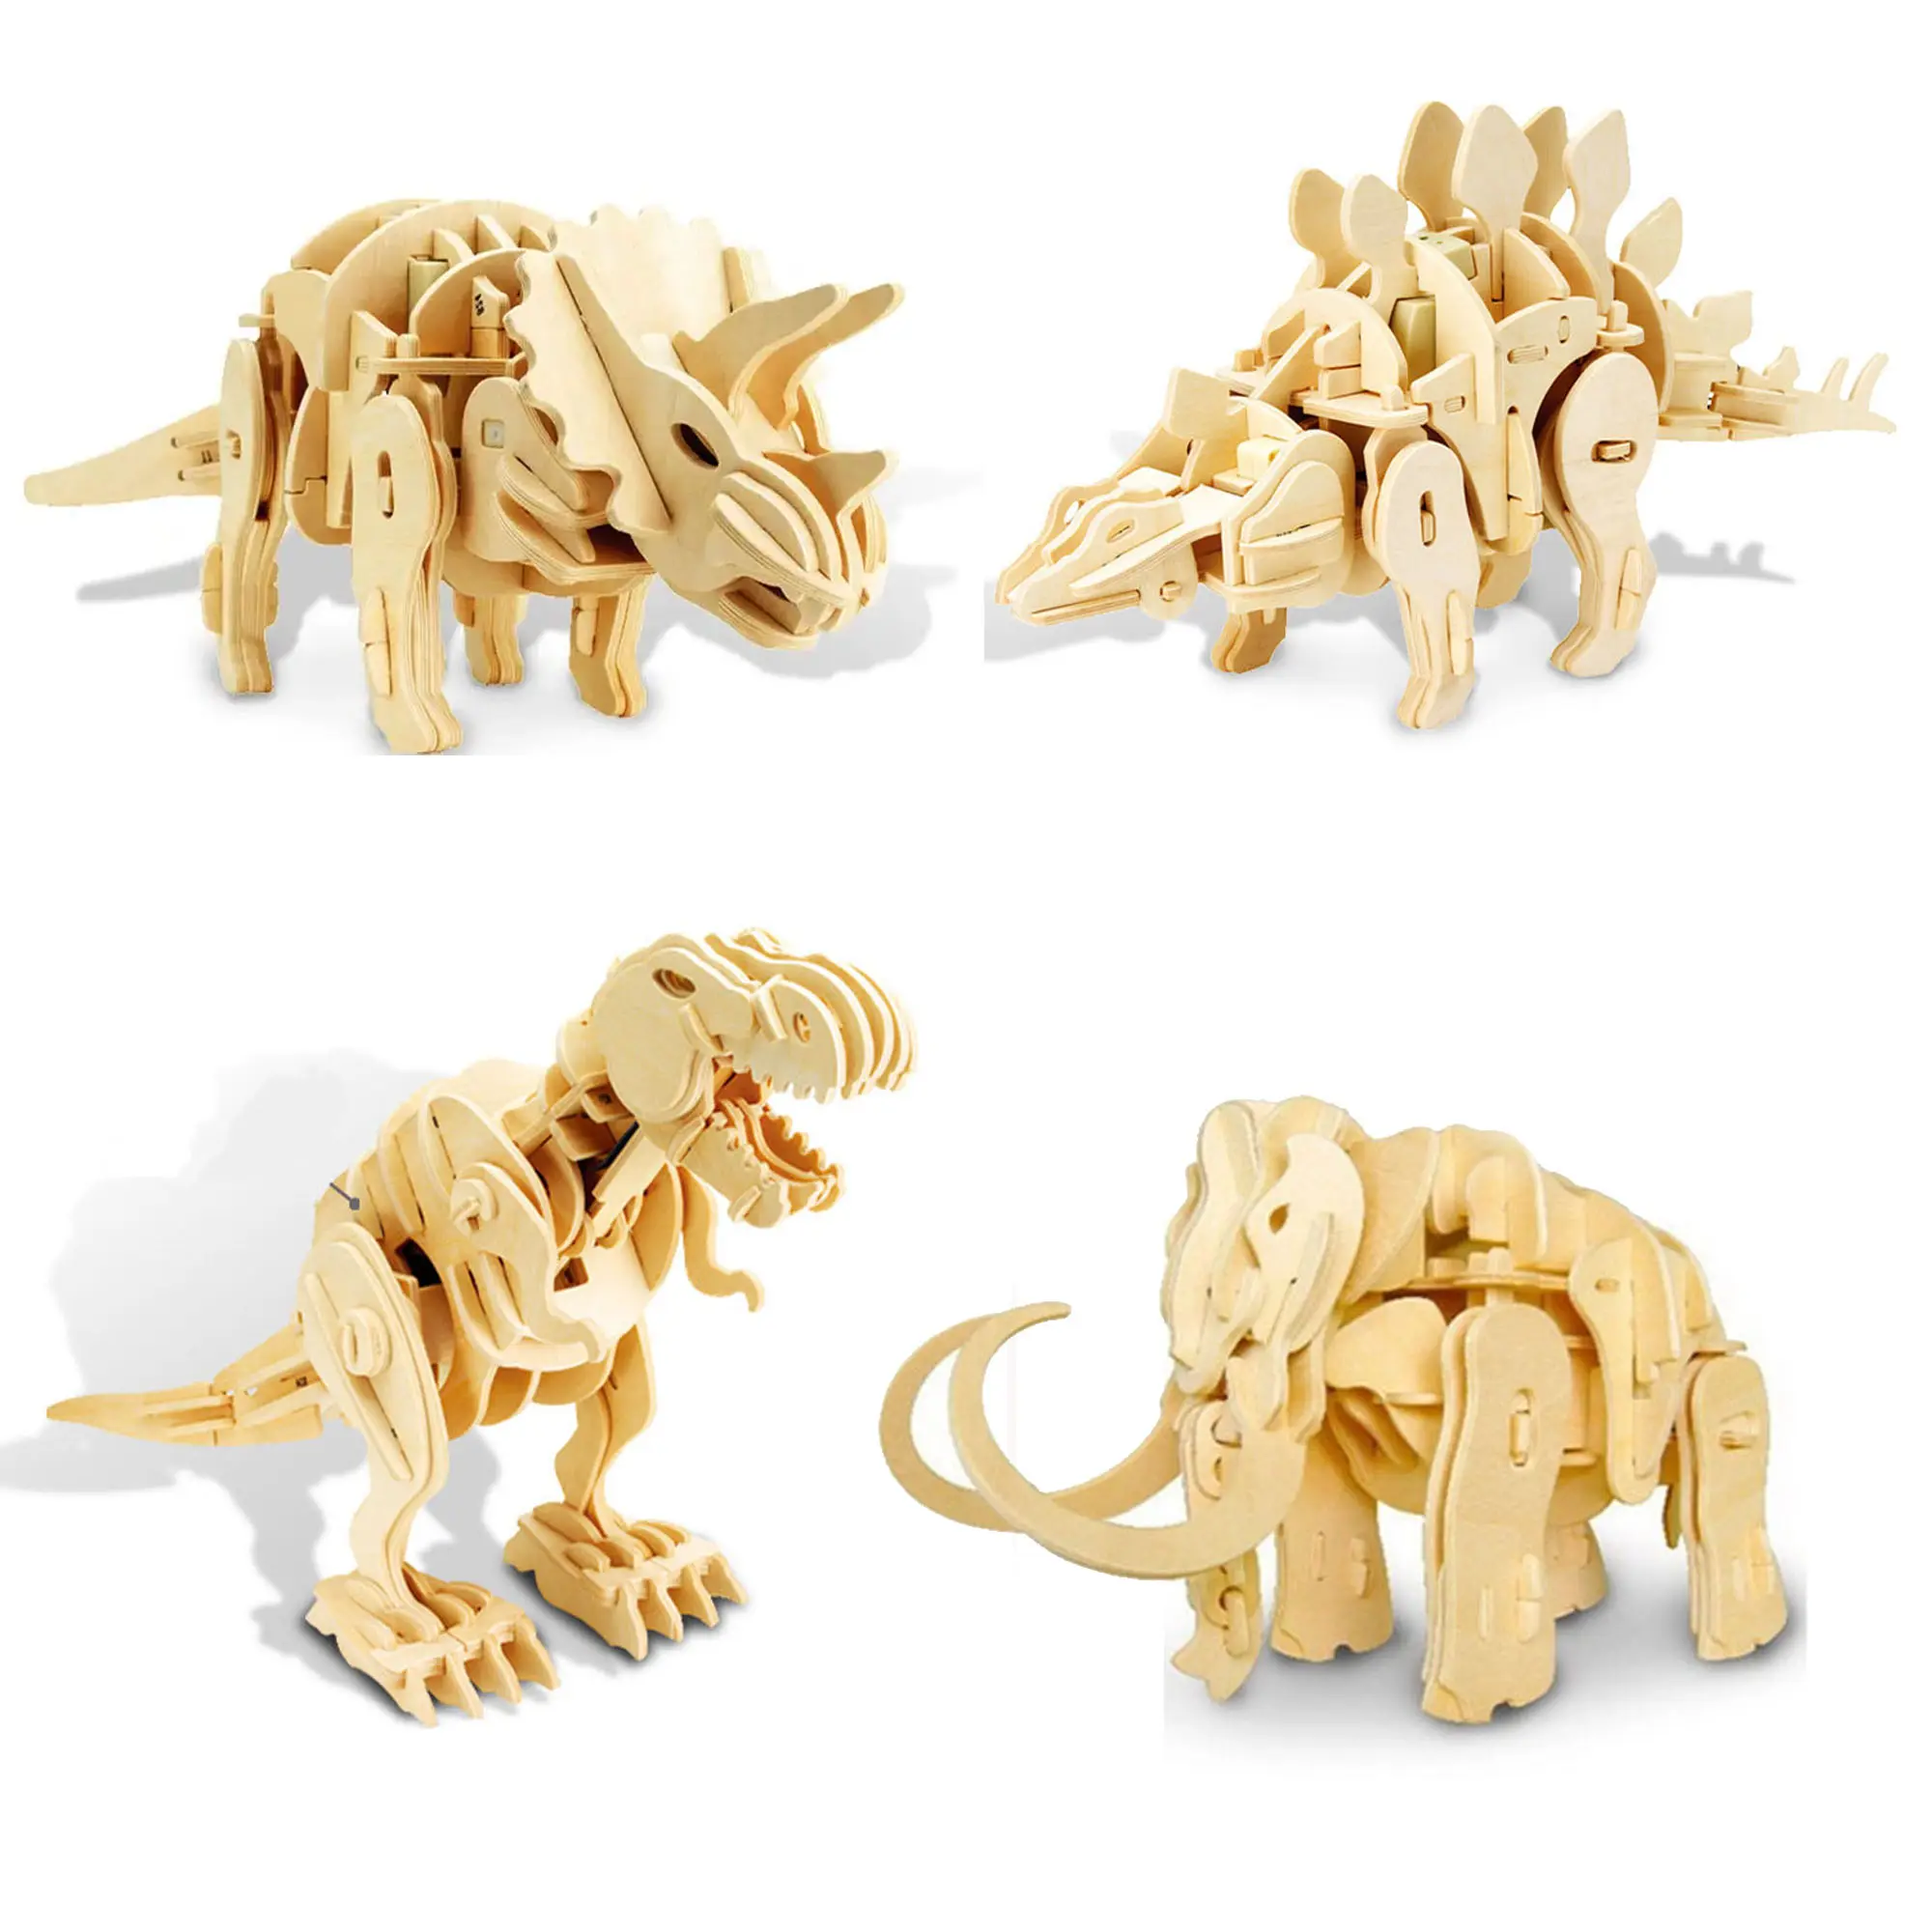 Wooden Animal Model 3D Dinosaur Puzzle STEM Kit Children's Educational Toy Wooden Dinosaur